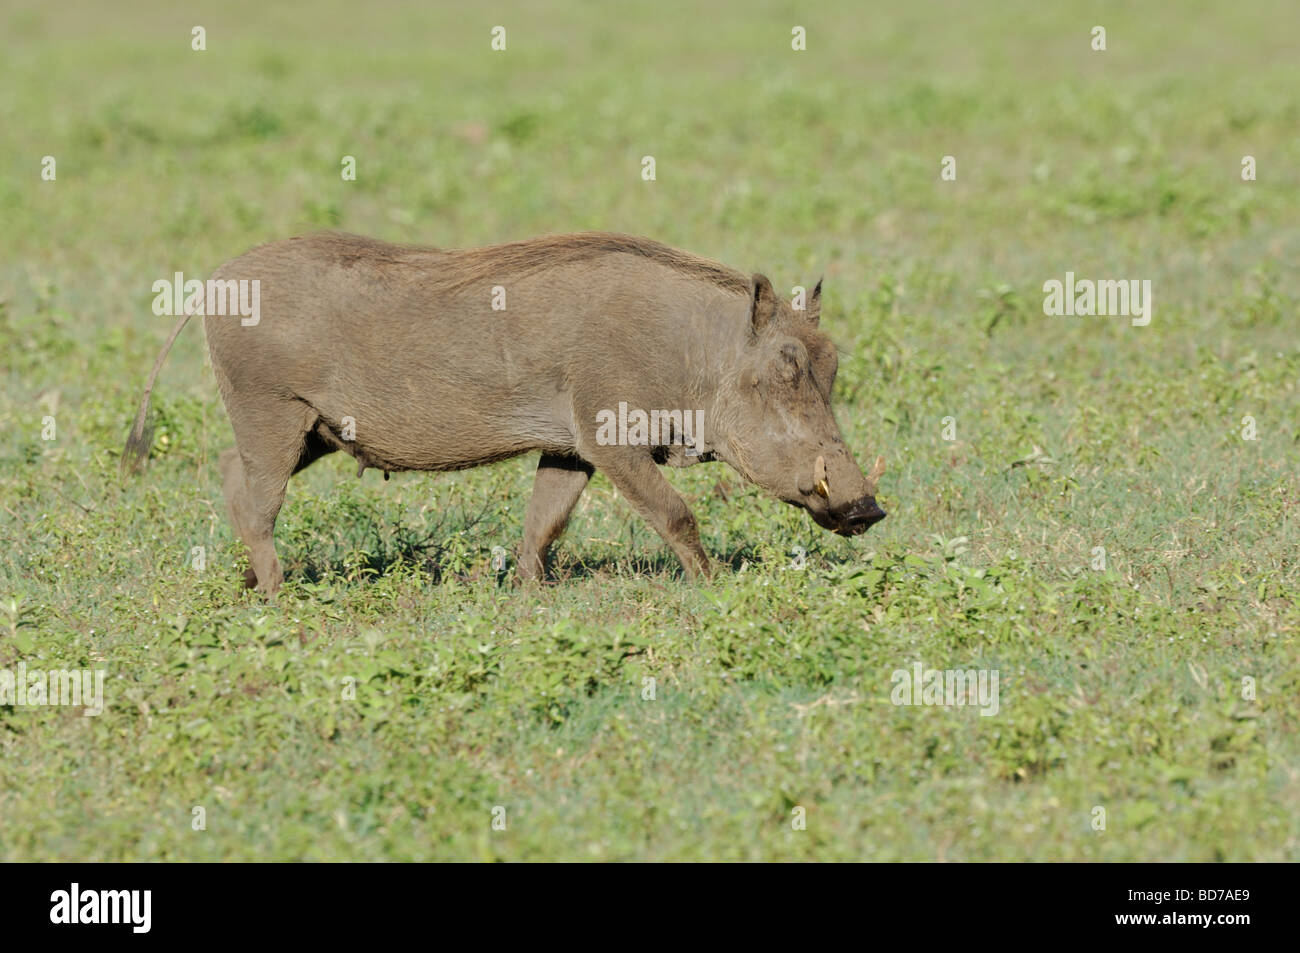 Stock Foto von Warzenschwein Weiden, Ngorongoro Crater, Tansania, 2009. Stockfoto